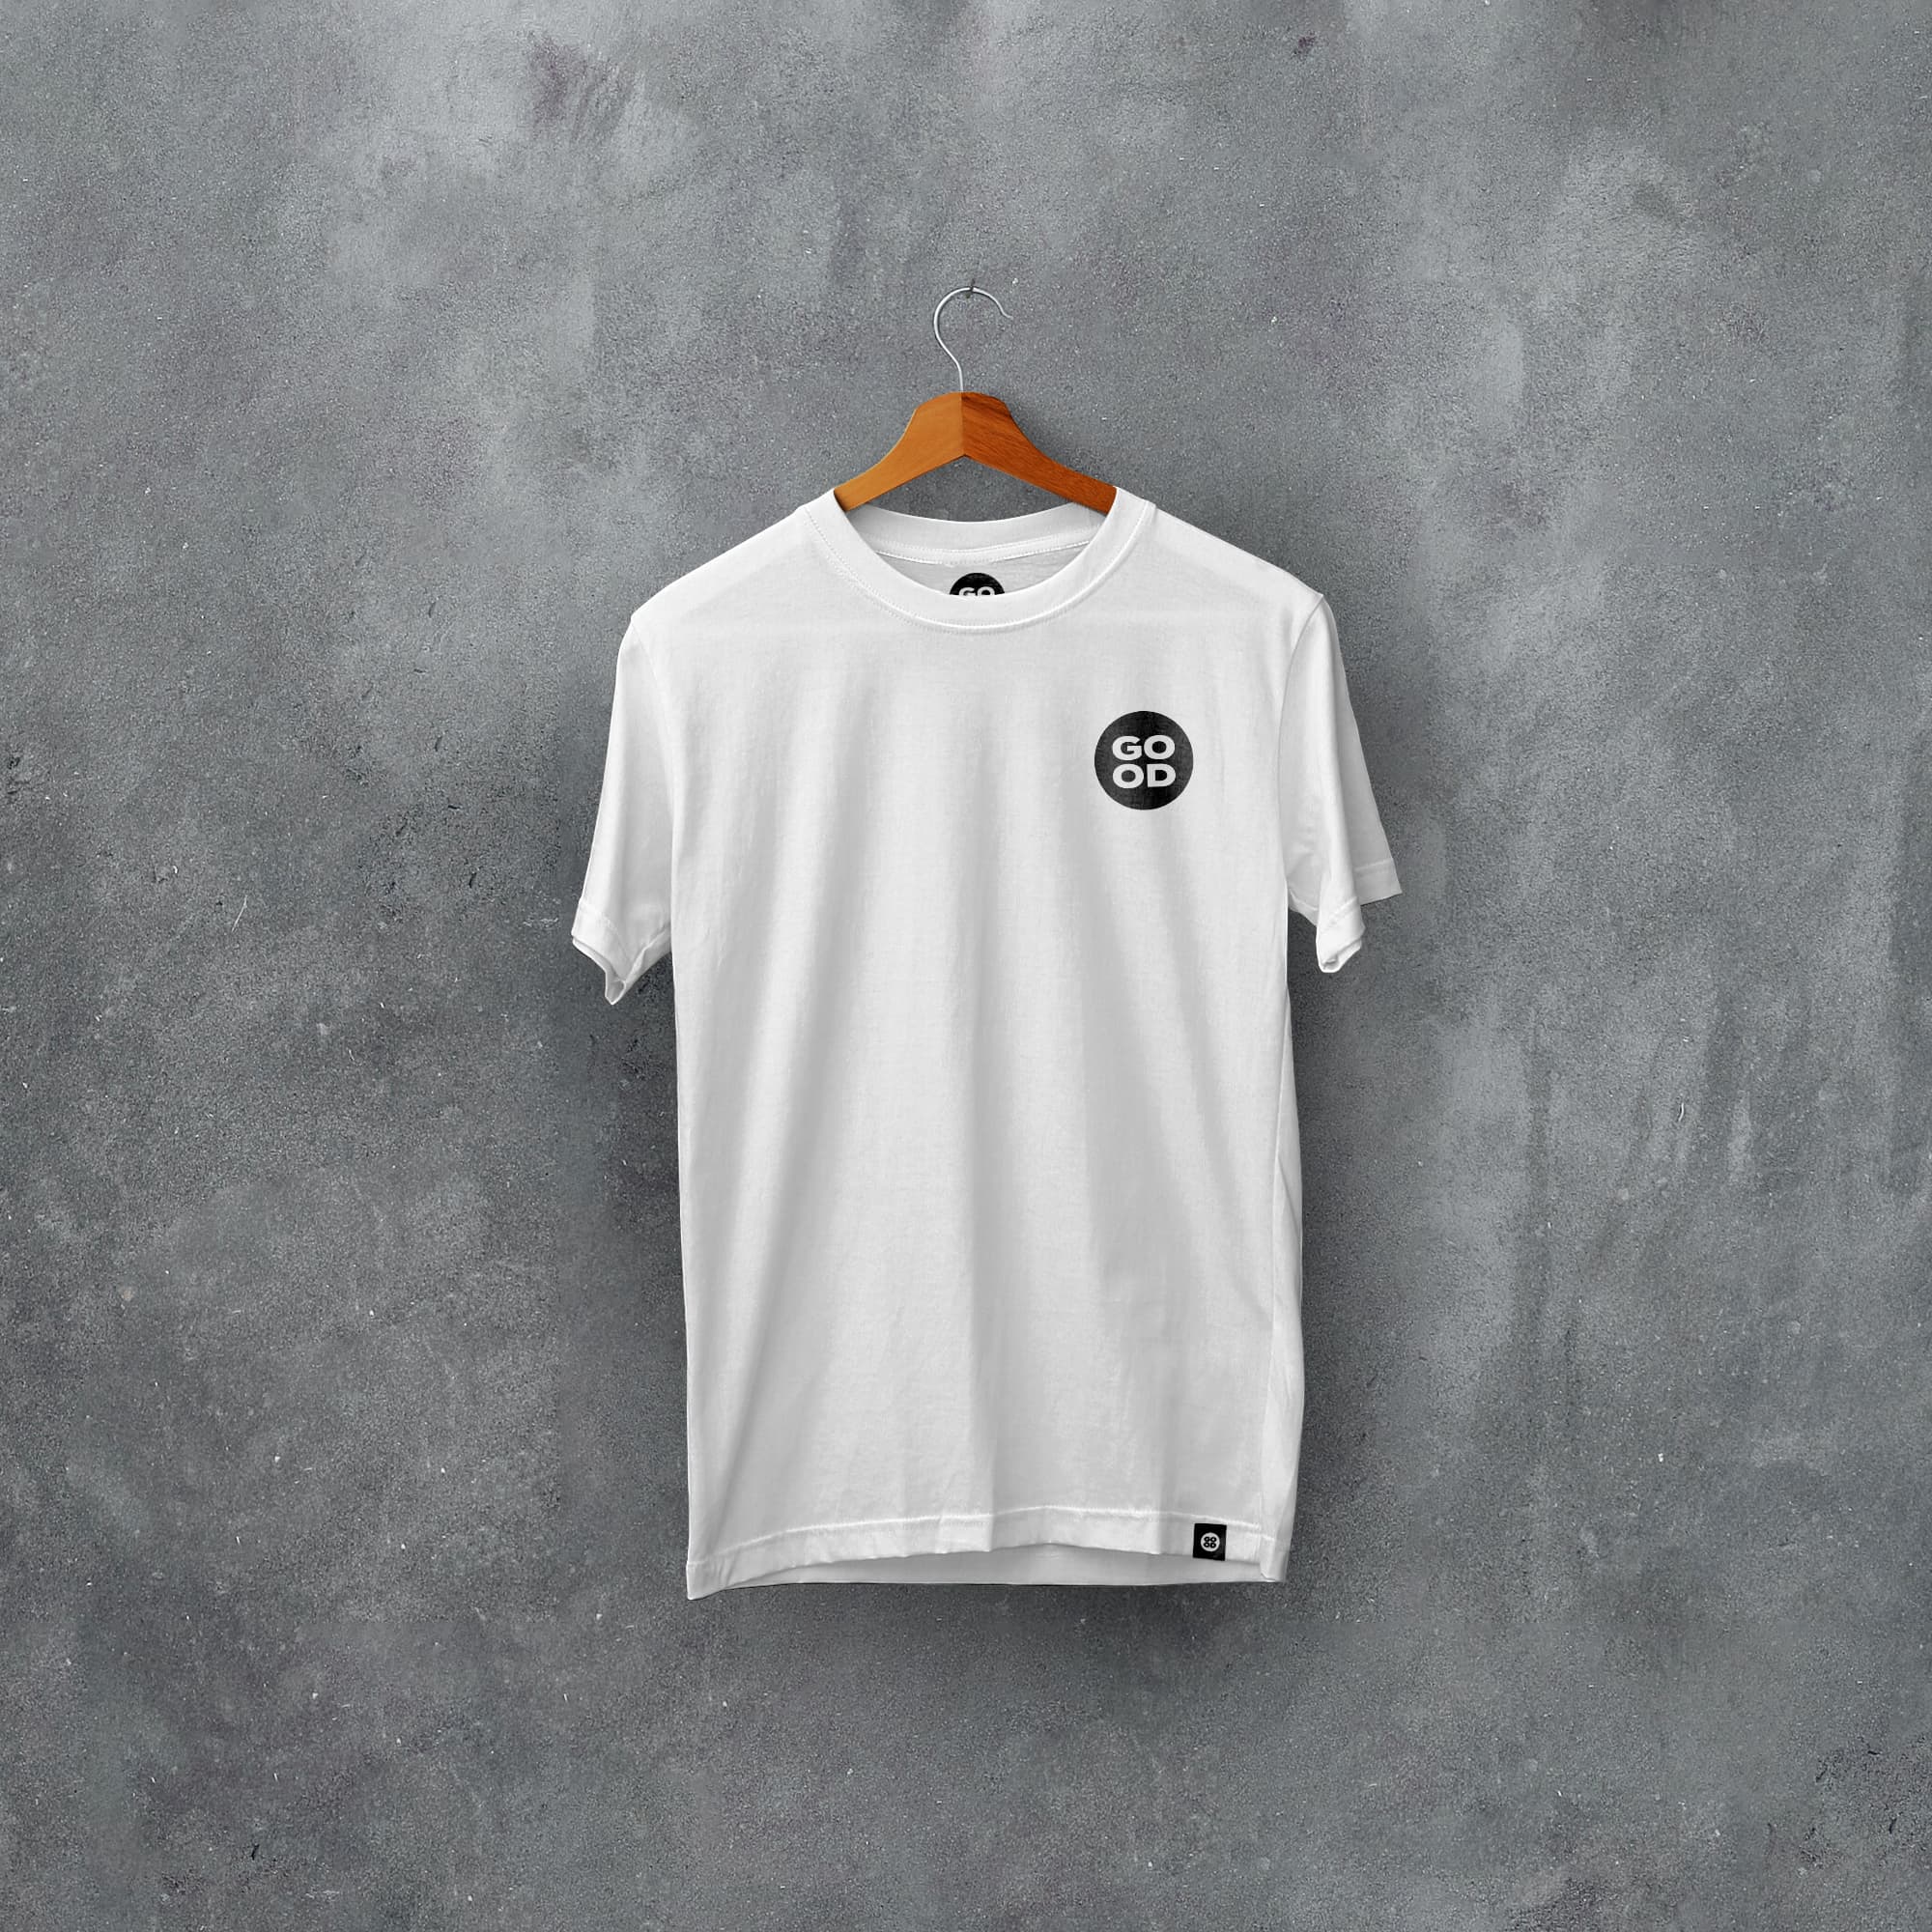 Boca Classic Kits Football T-Shirt